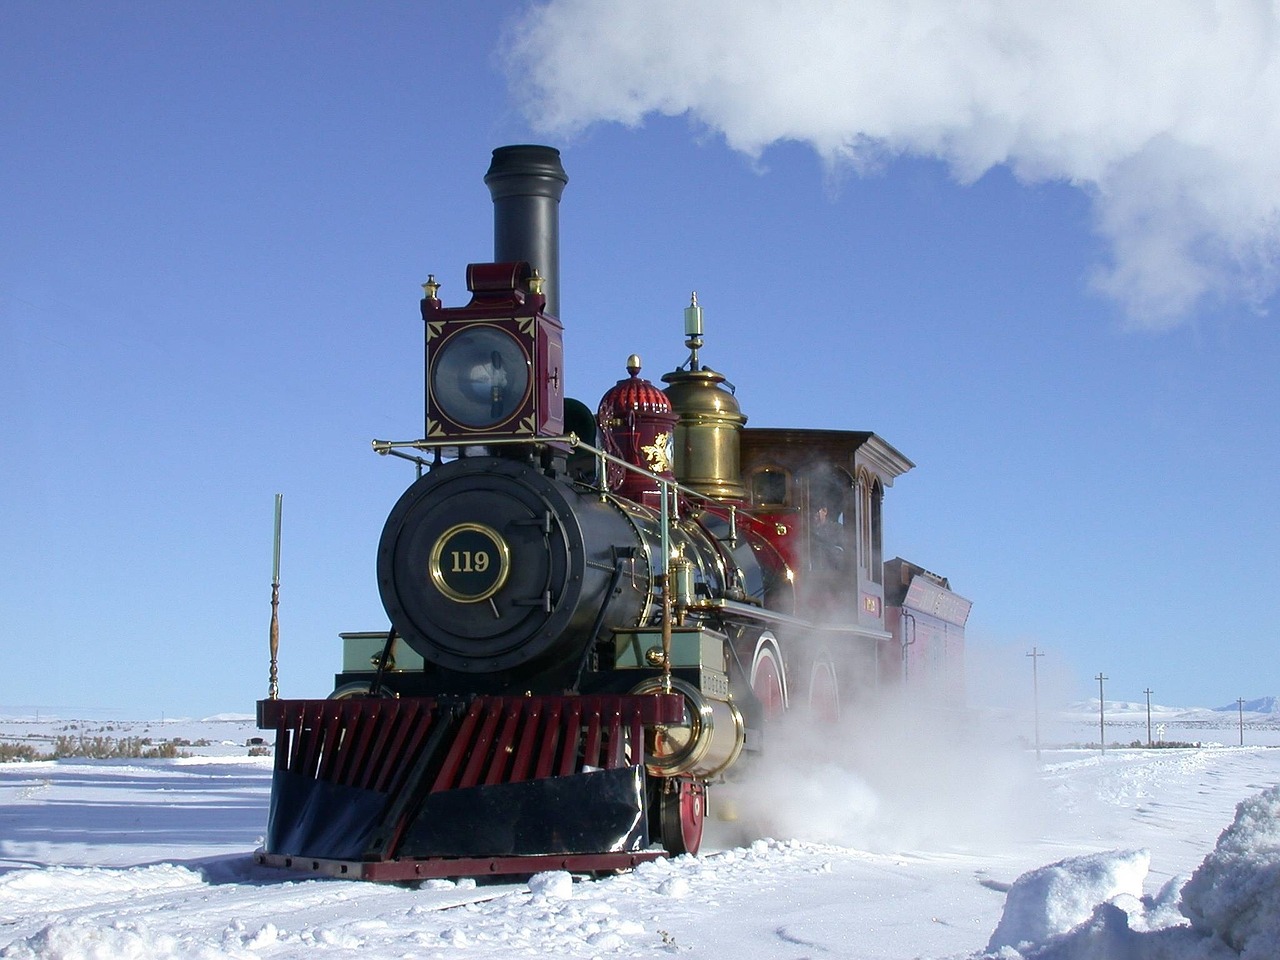 steam-locomotive-756123_1280